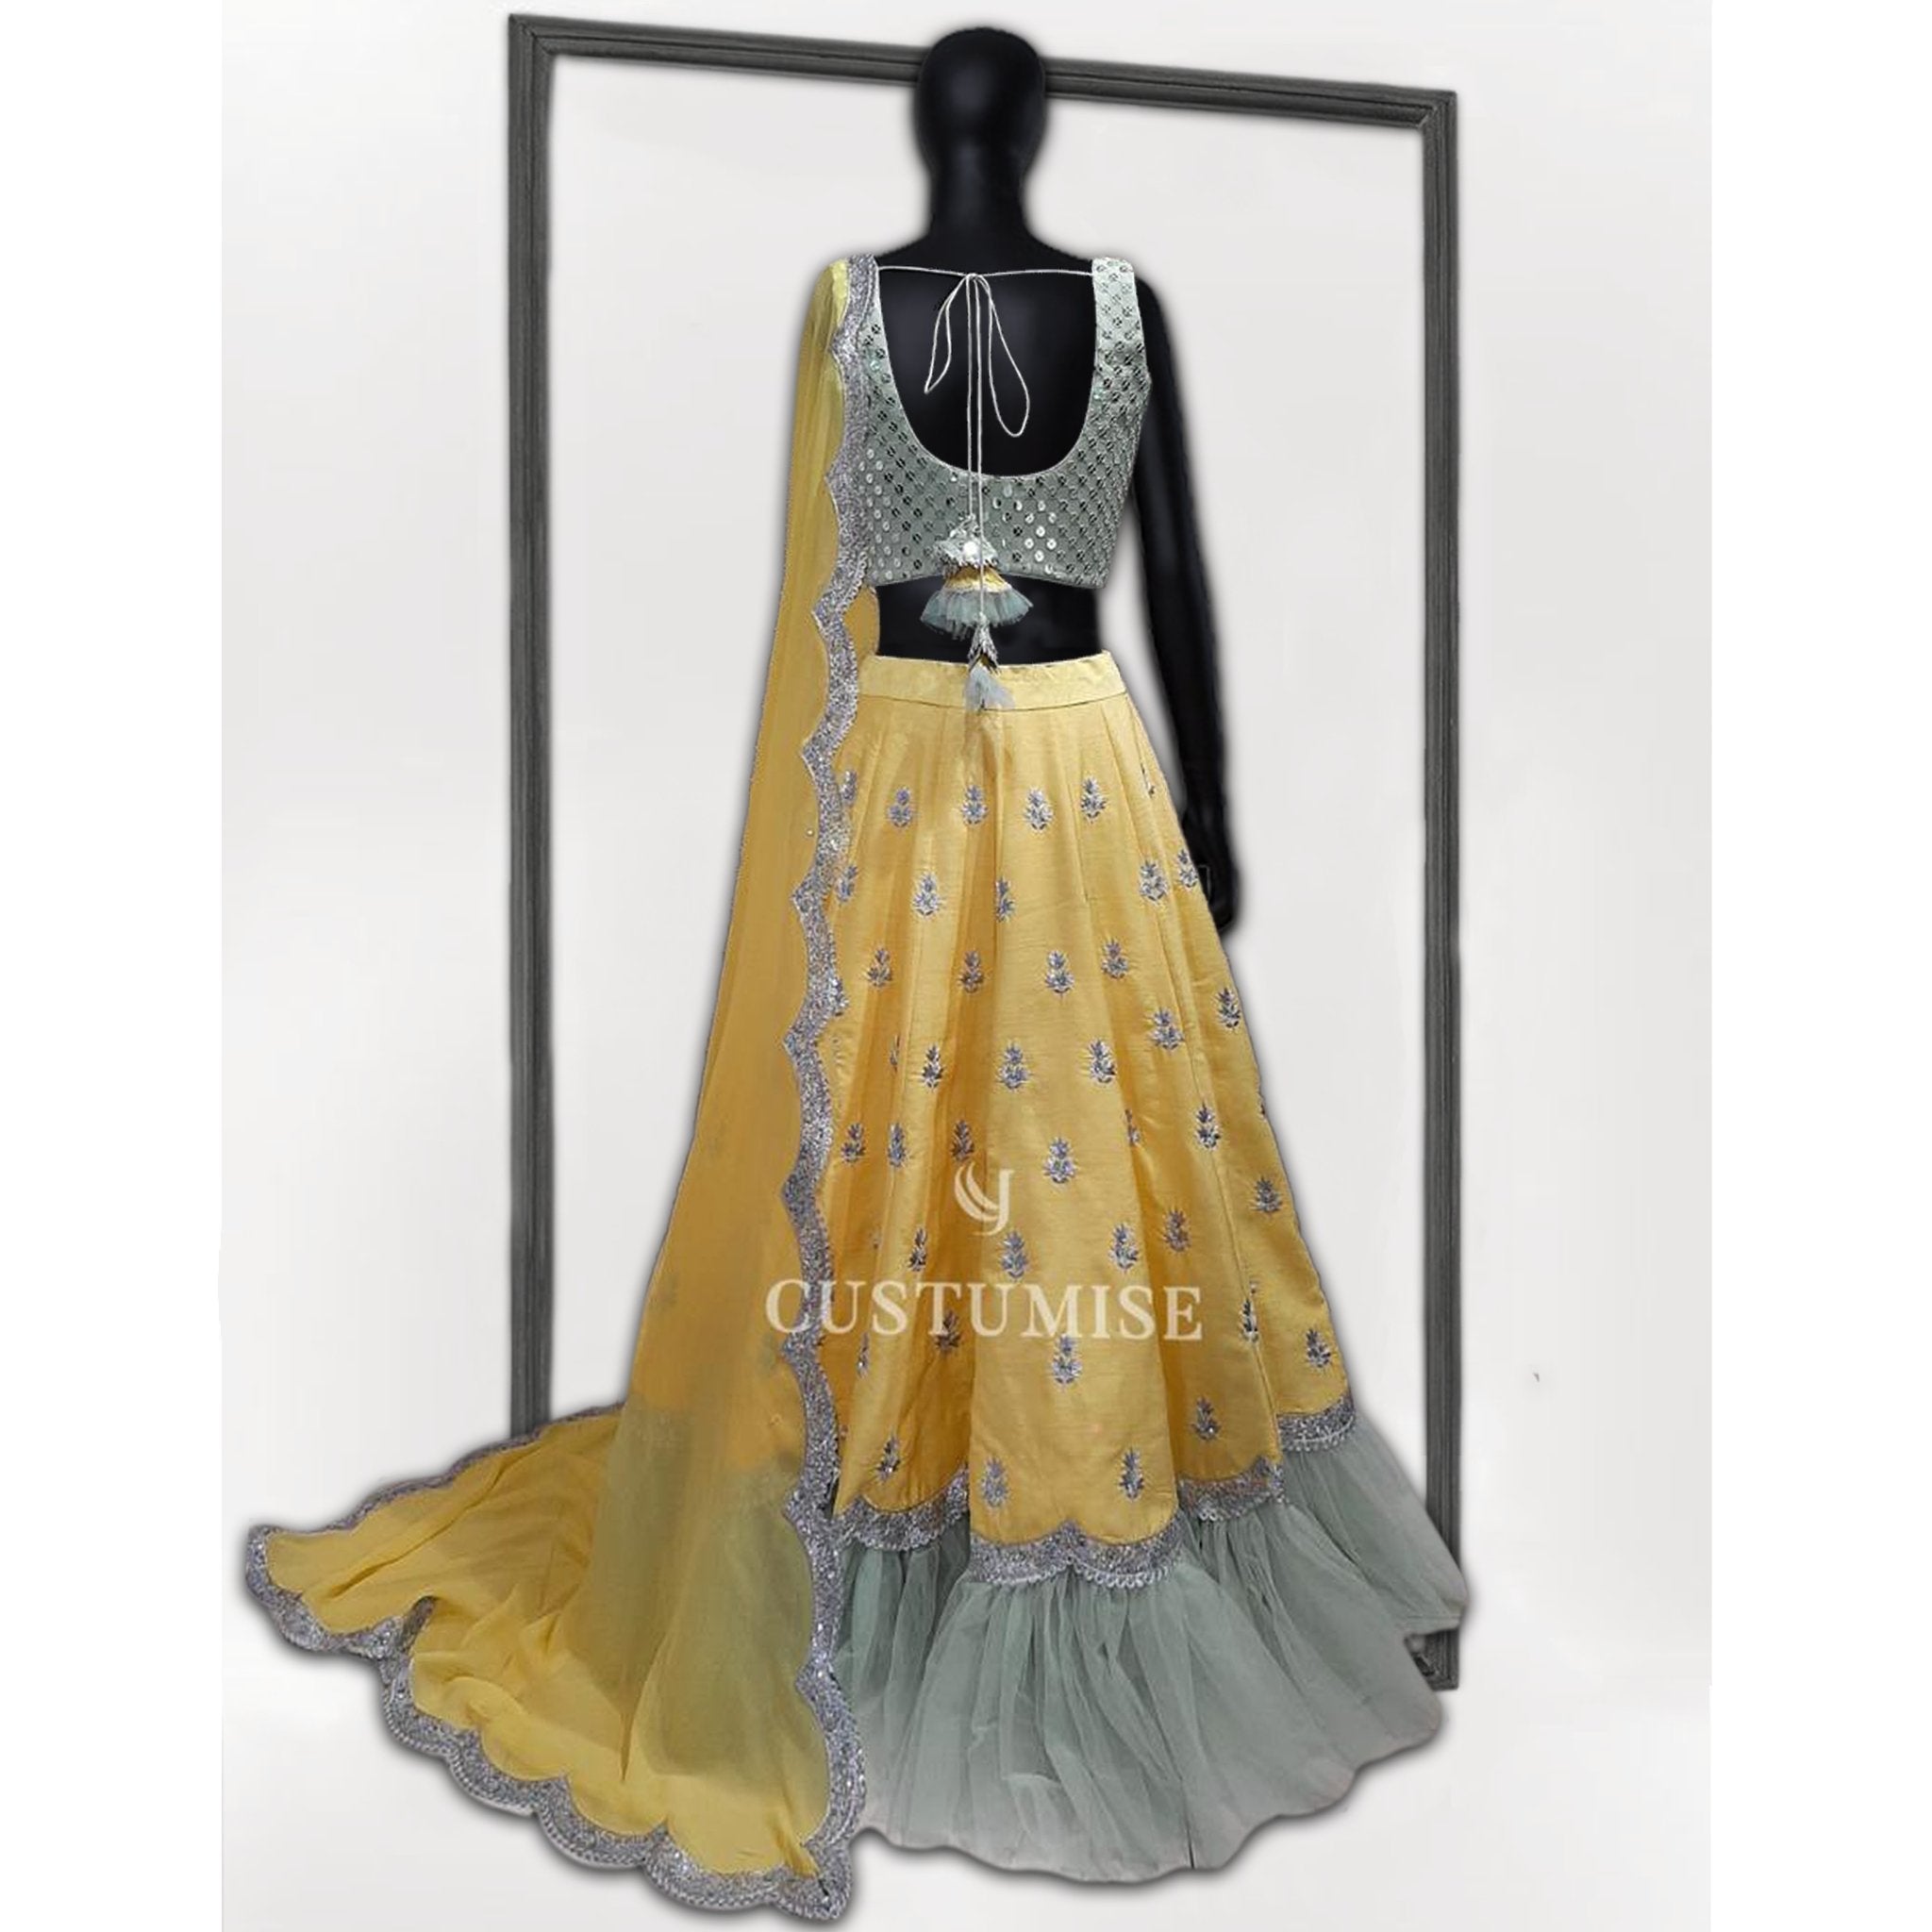 Pastel yellow and Mint green Lehenga - Indian Designer Bridal Wedding Outfit